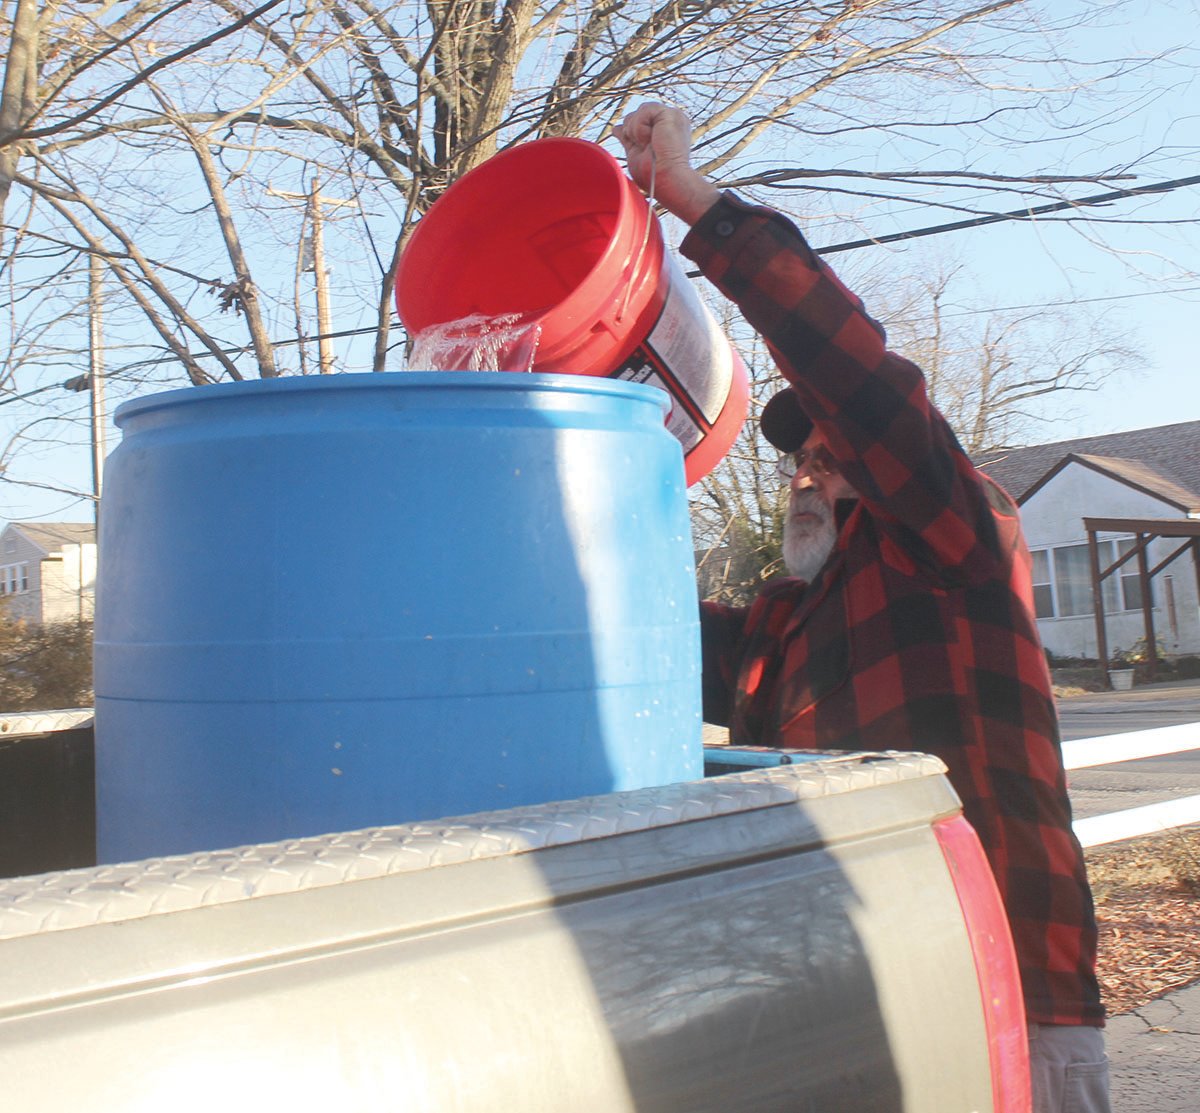 Allen Marrocco pours his sap into a large barrell.